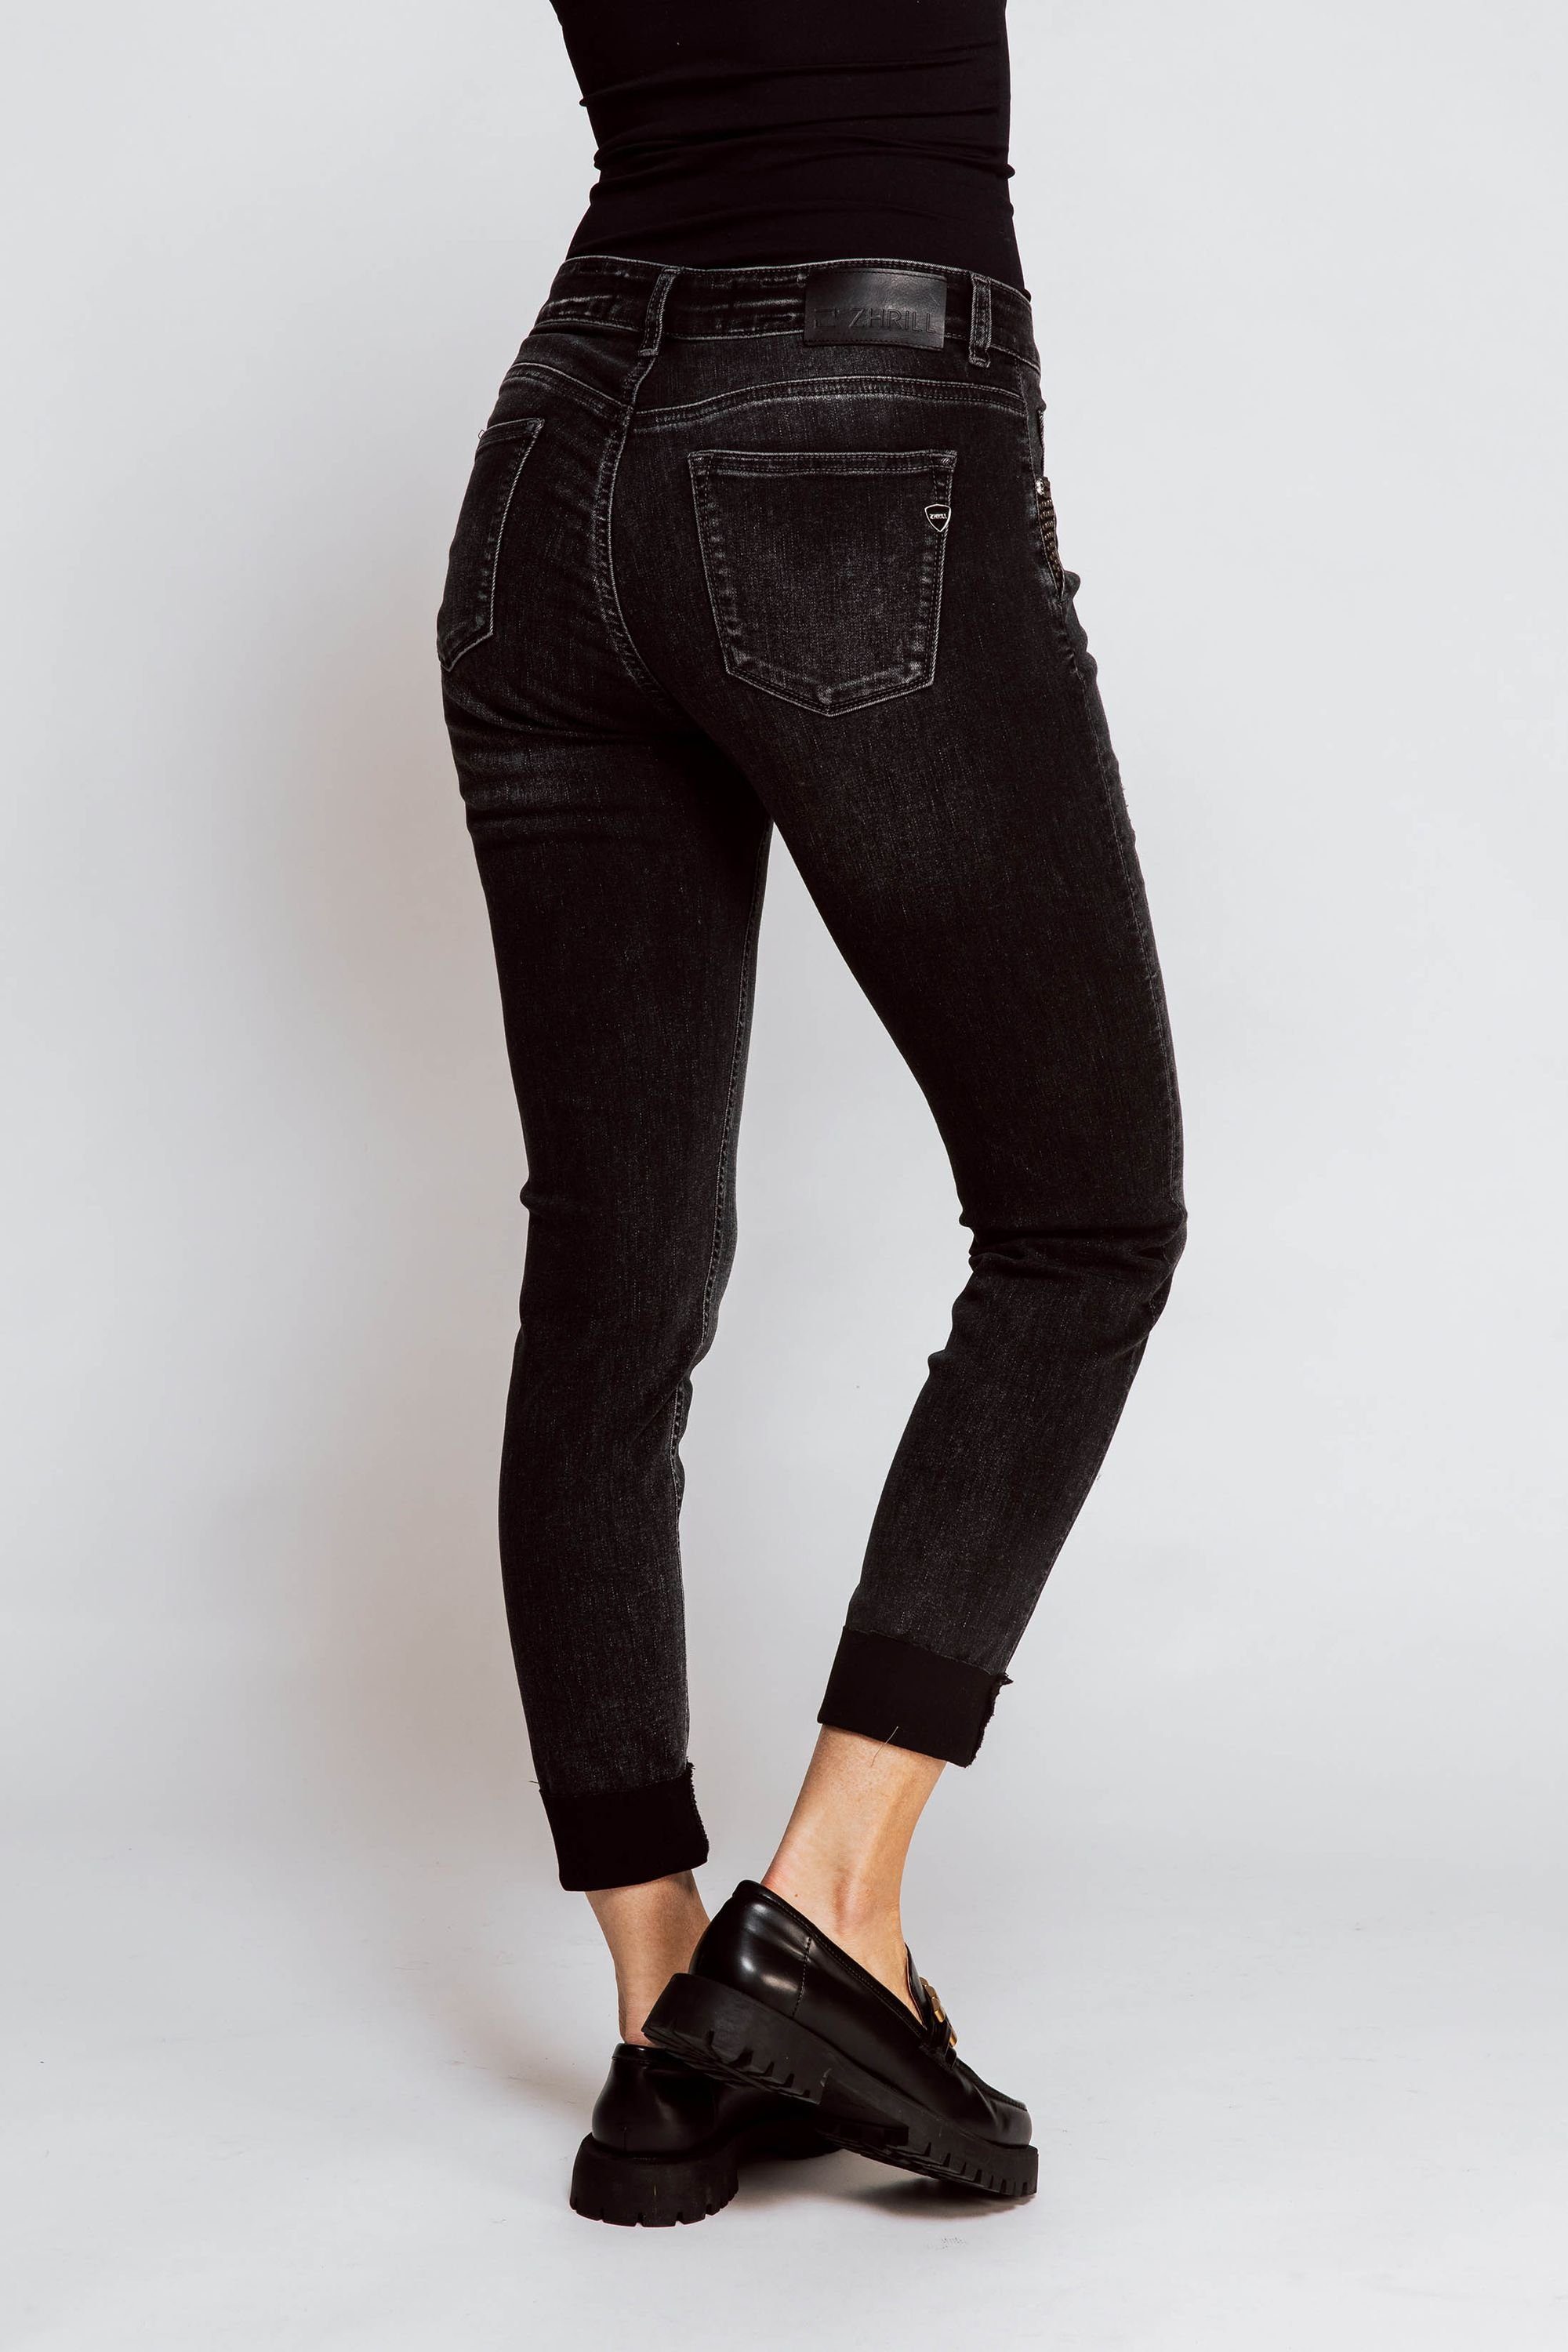 Zhrill Jeans Black NOVA Skinny Tragekomfort angenehmer Skinny-fit-Jeans